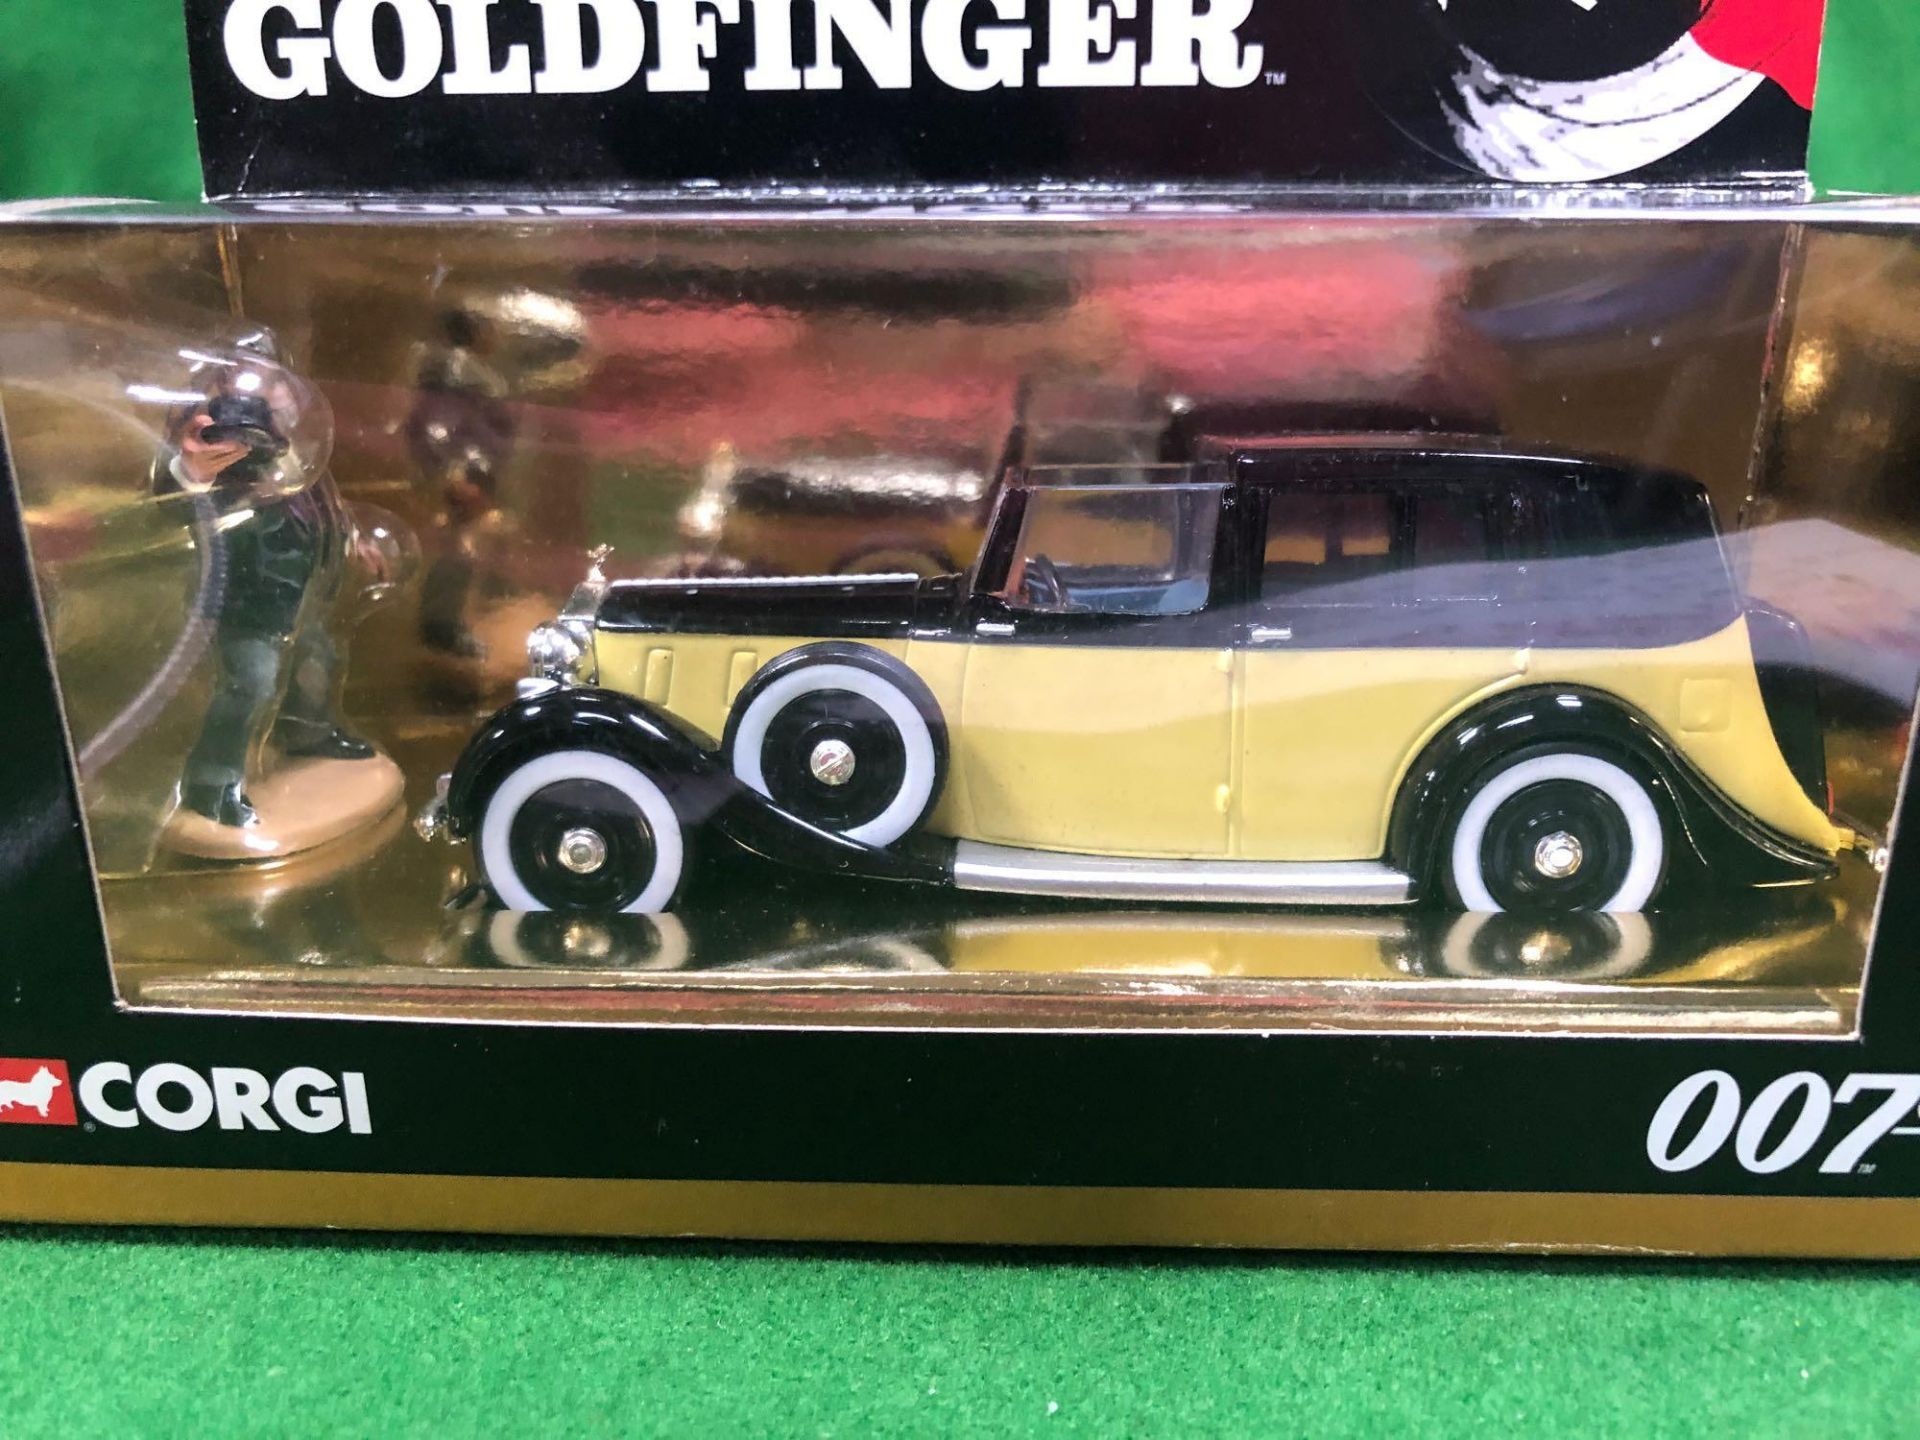 Corgi The Directors Cut 007 Goldfinger CC06803 Rolls Royce Ii Sedance De Ville From Goldfinger - Image 2 of 2